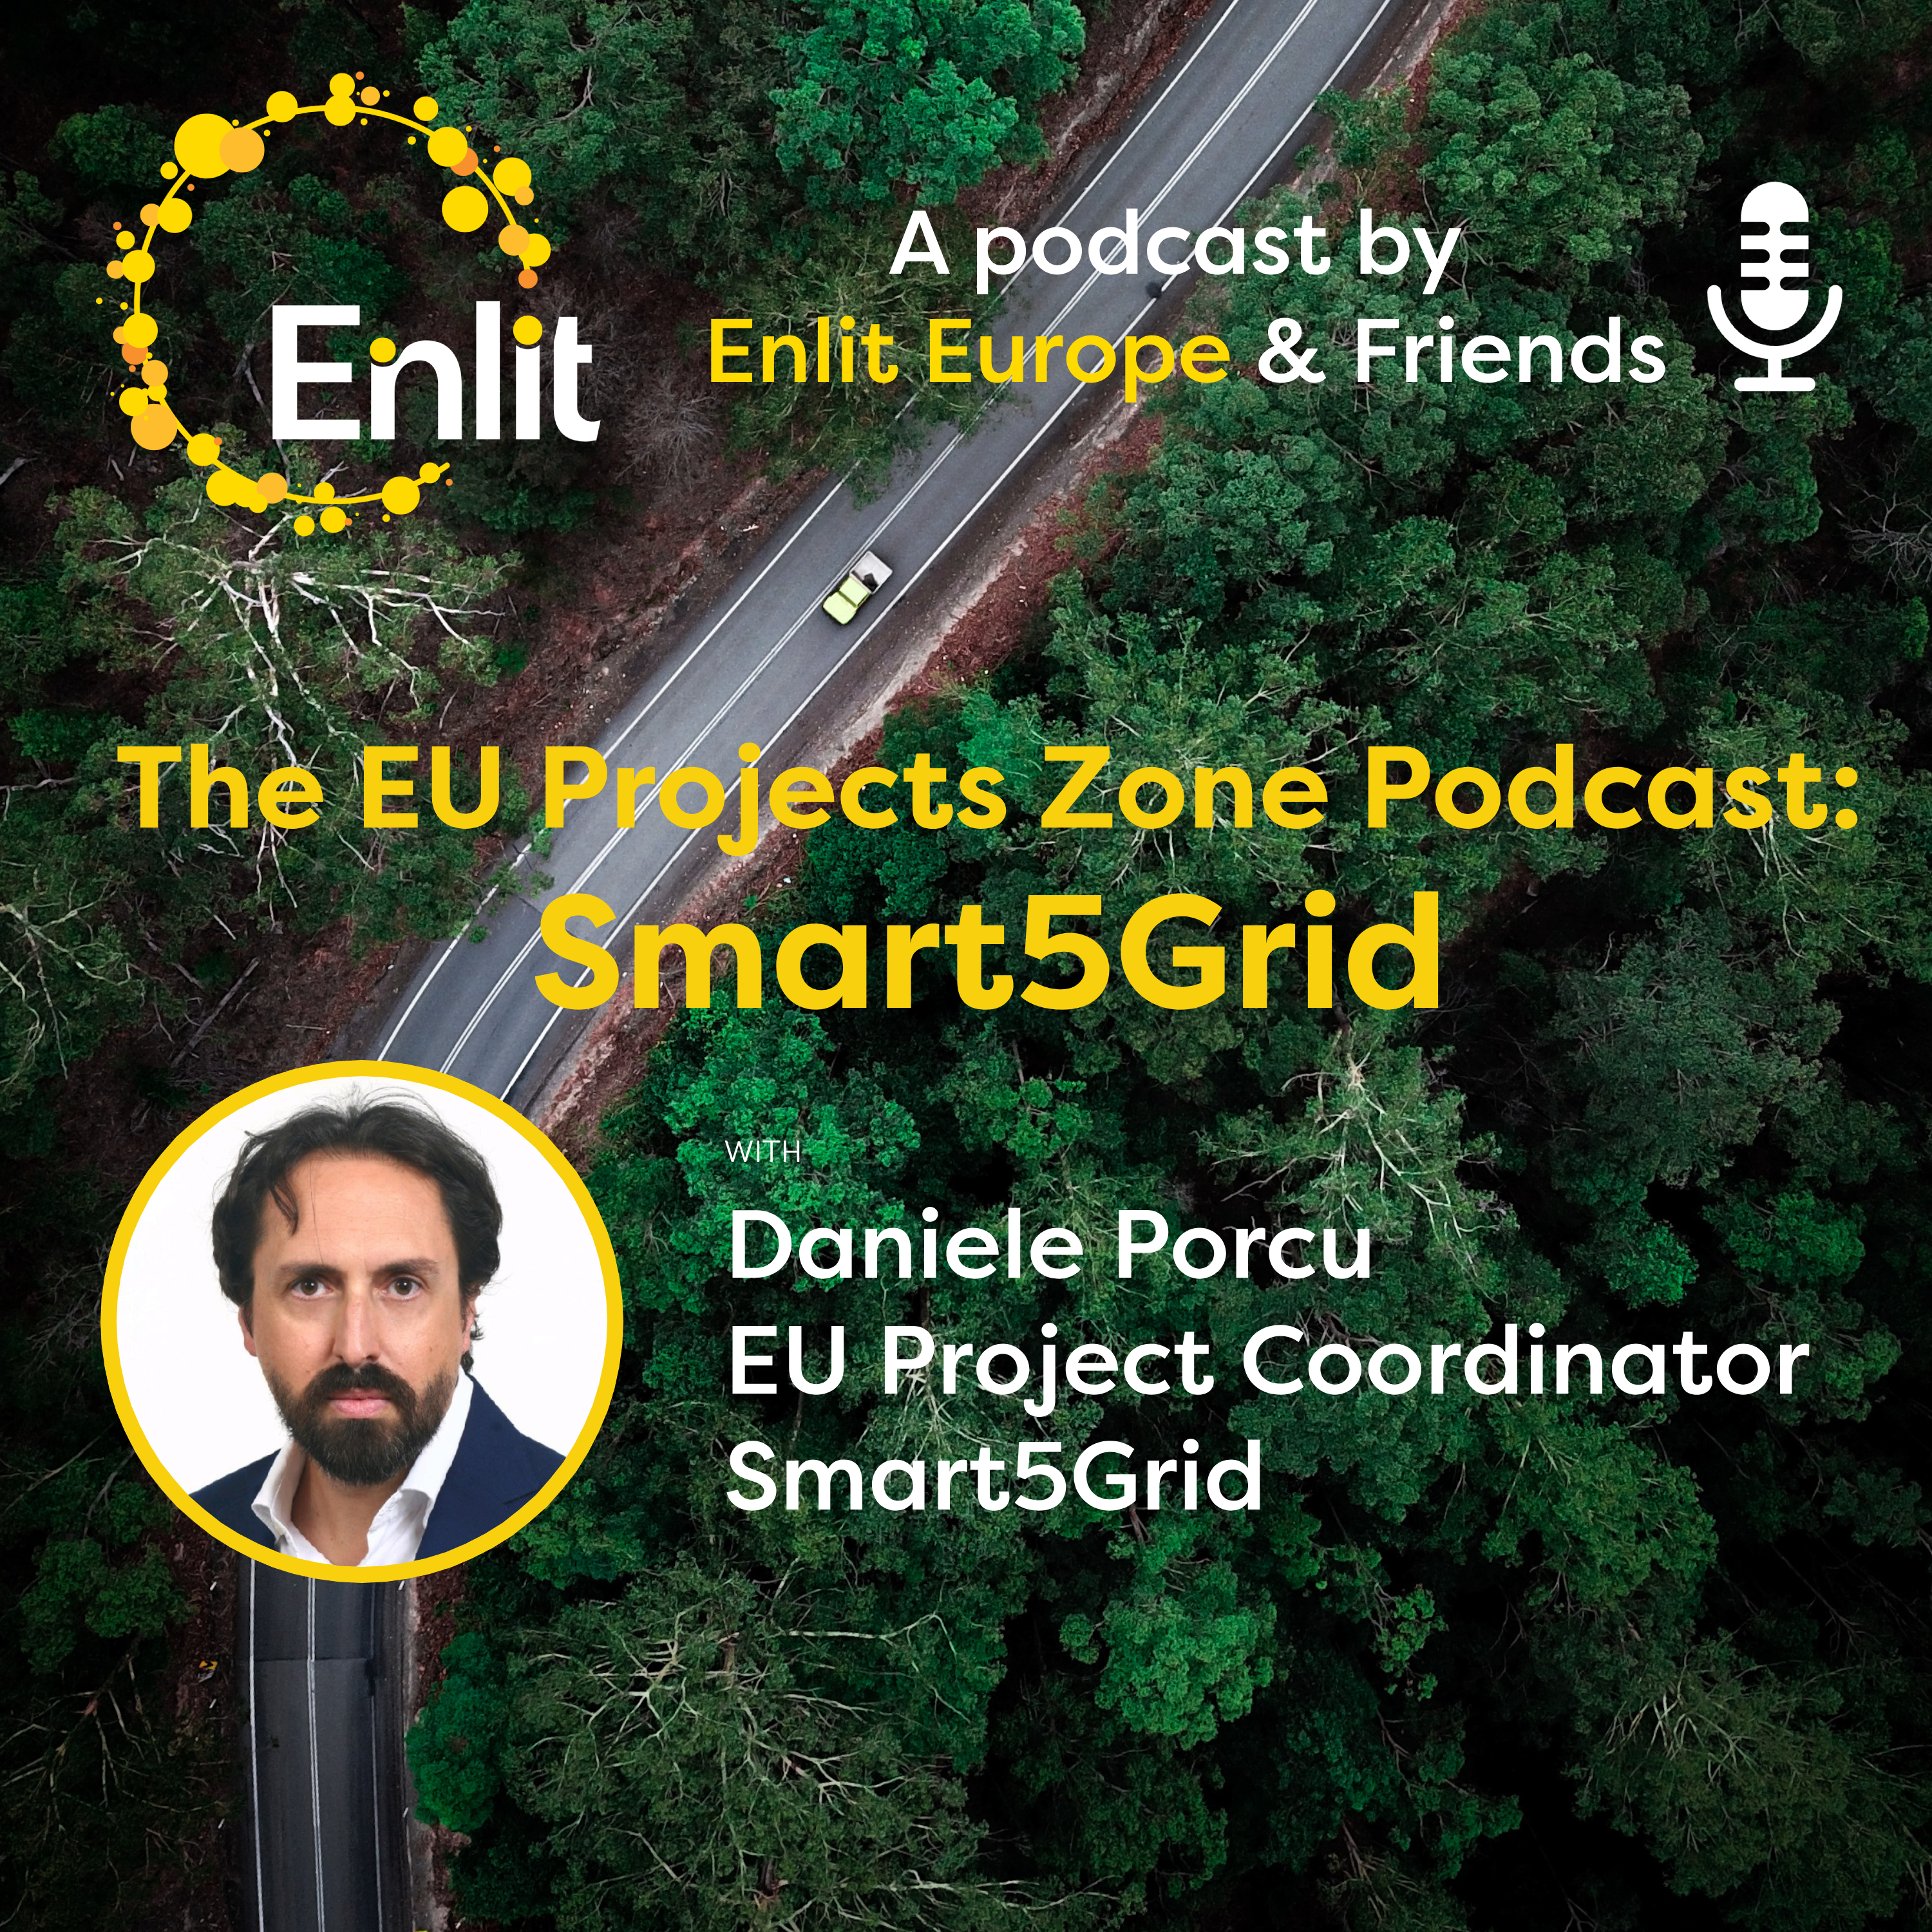 The EU Projects Zone Podcast: Smart5Grid with Daniele Porcu